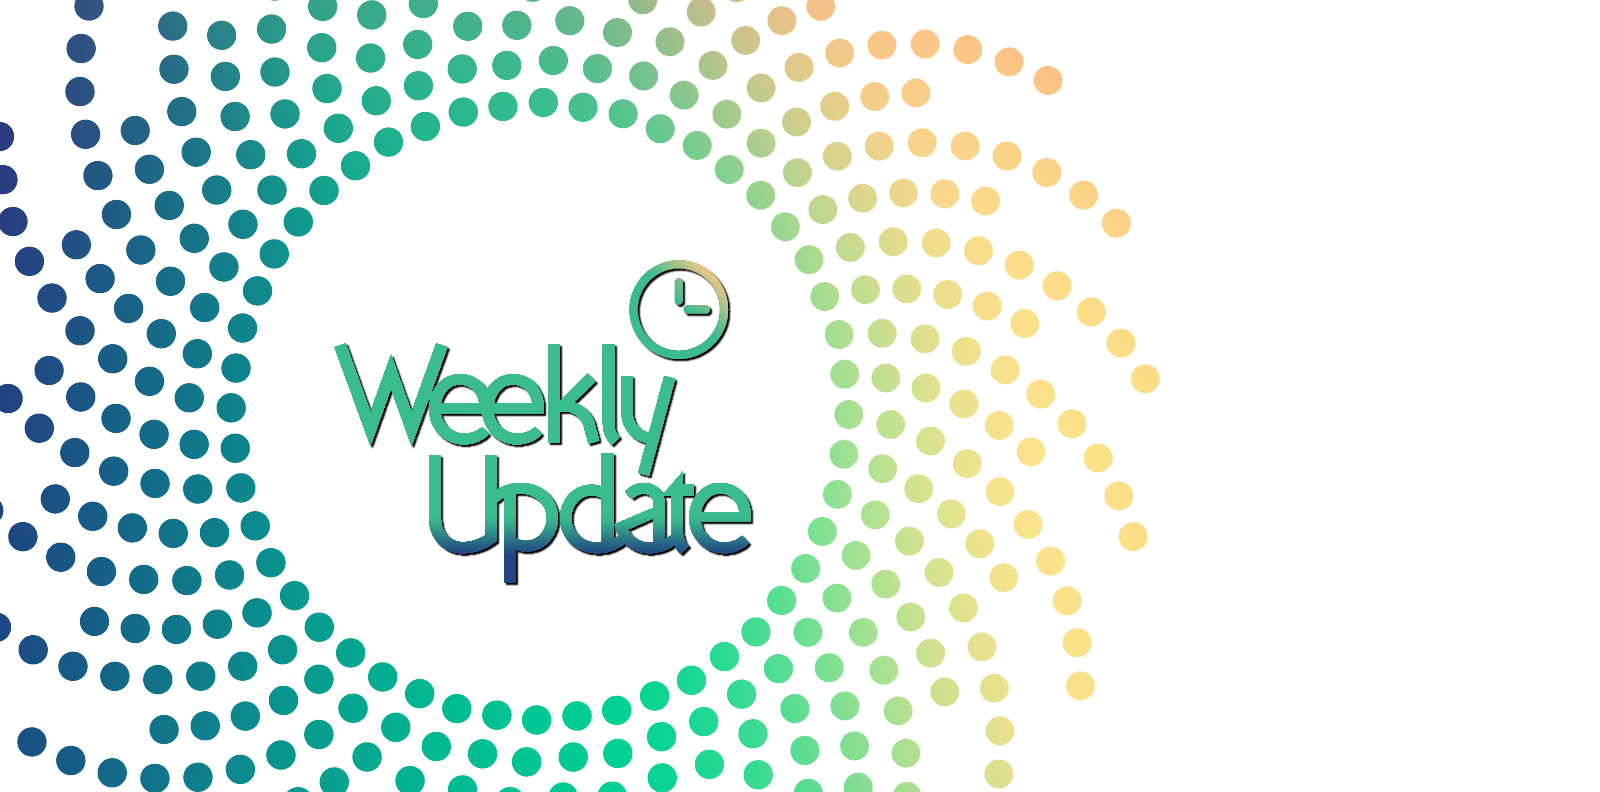 Curie Weekly Update.png